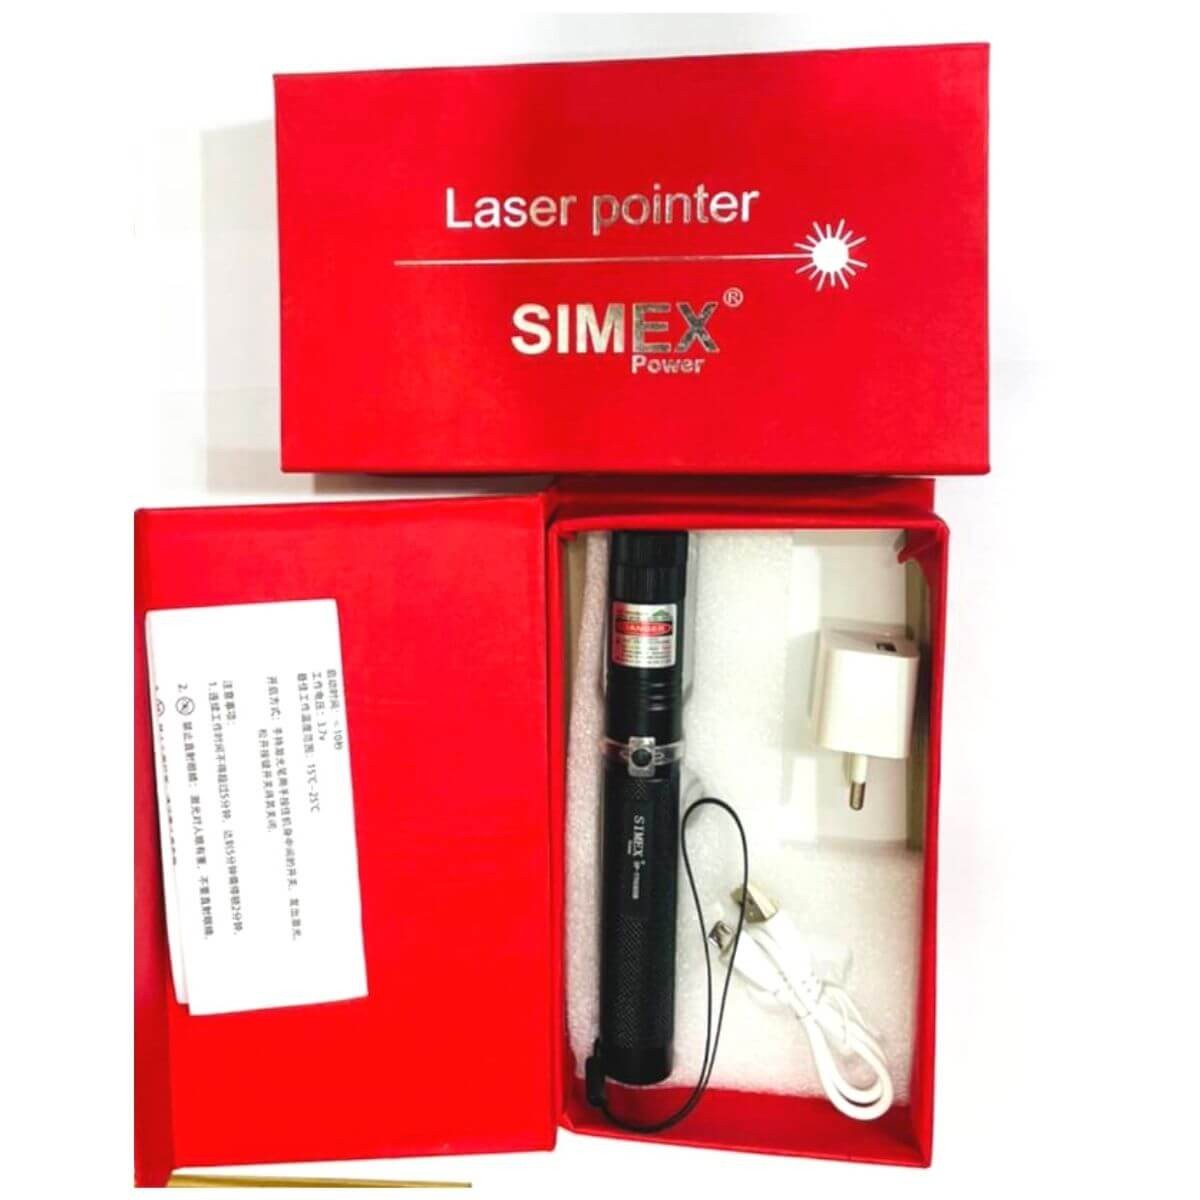 Simex Power Laser Pointer Light 303